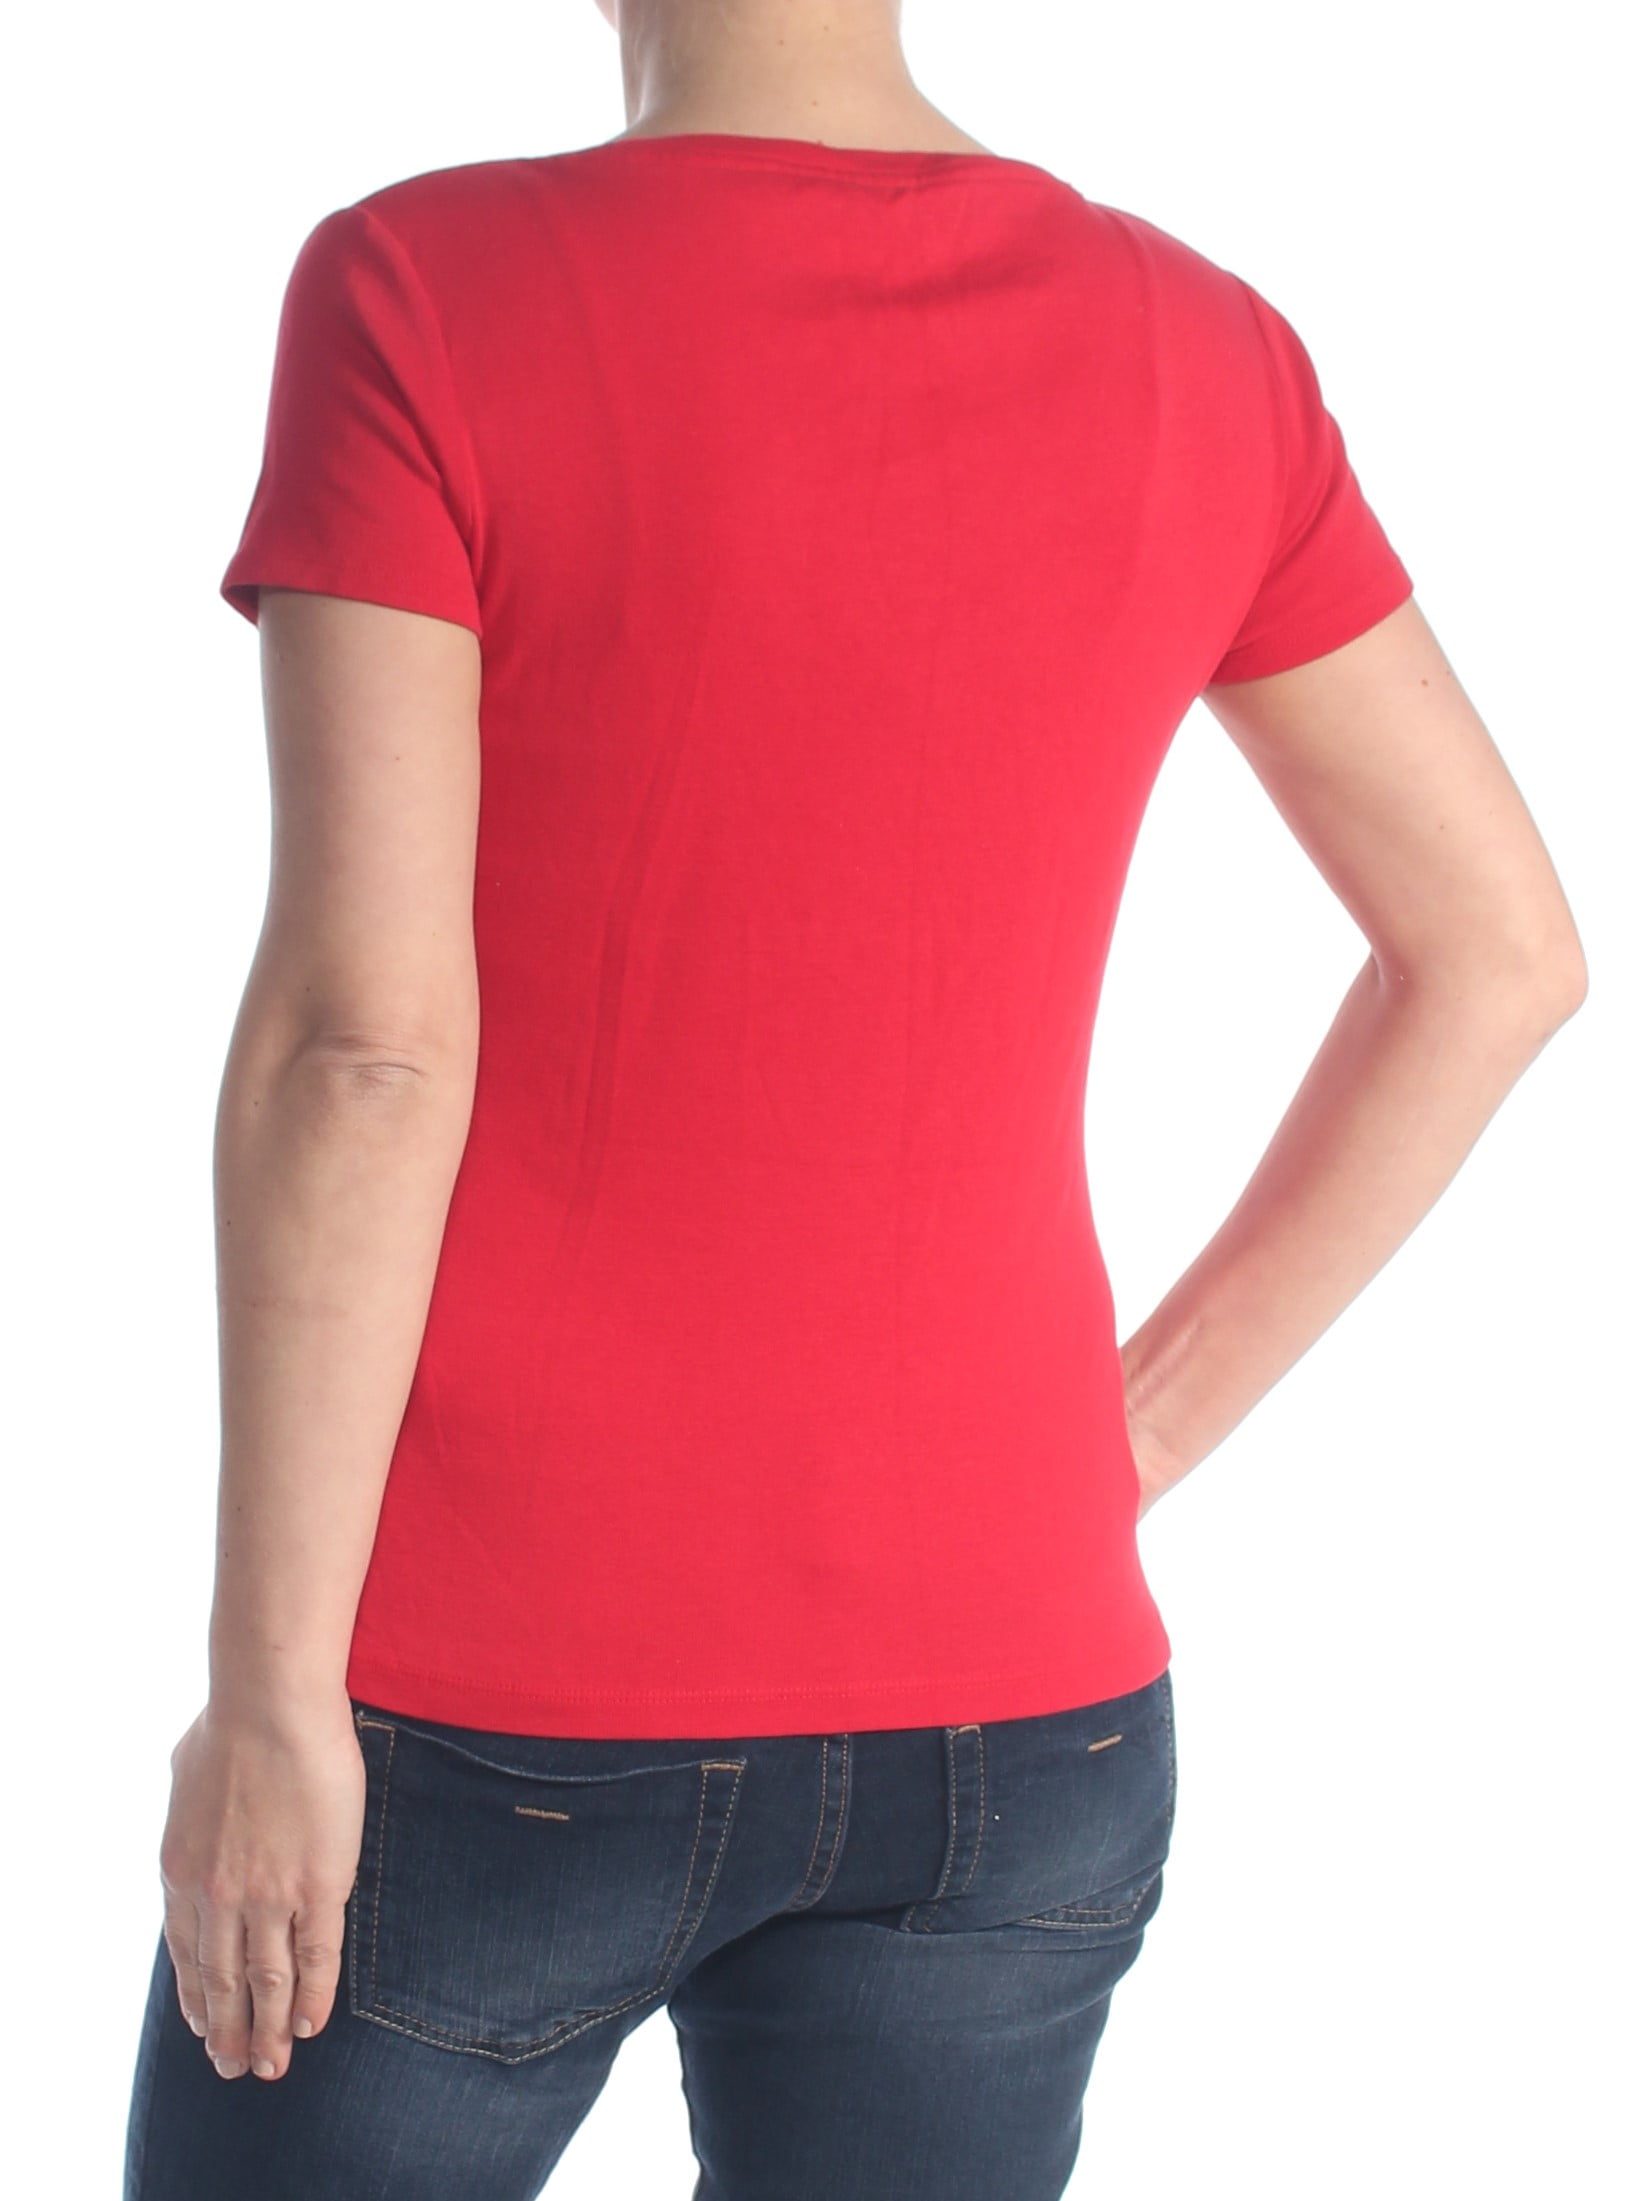 Tommy Hilfiger Womens Logo Basic T-Shirt, Red, Large